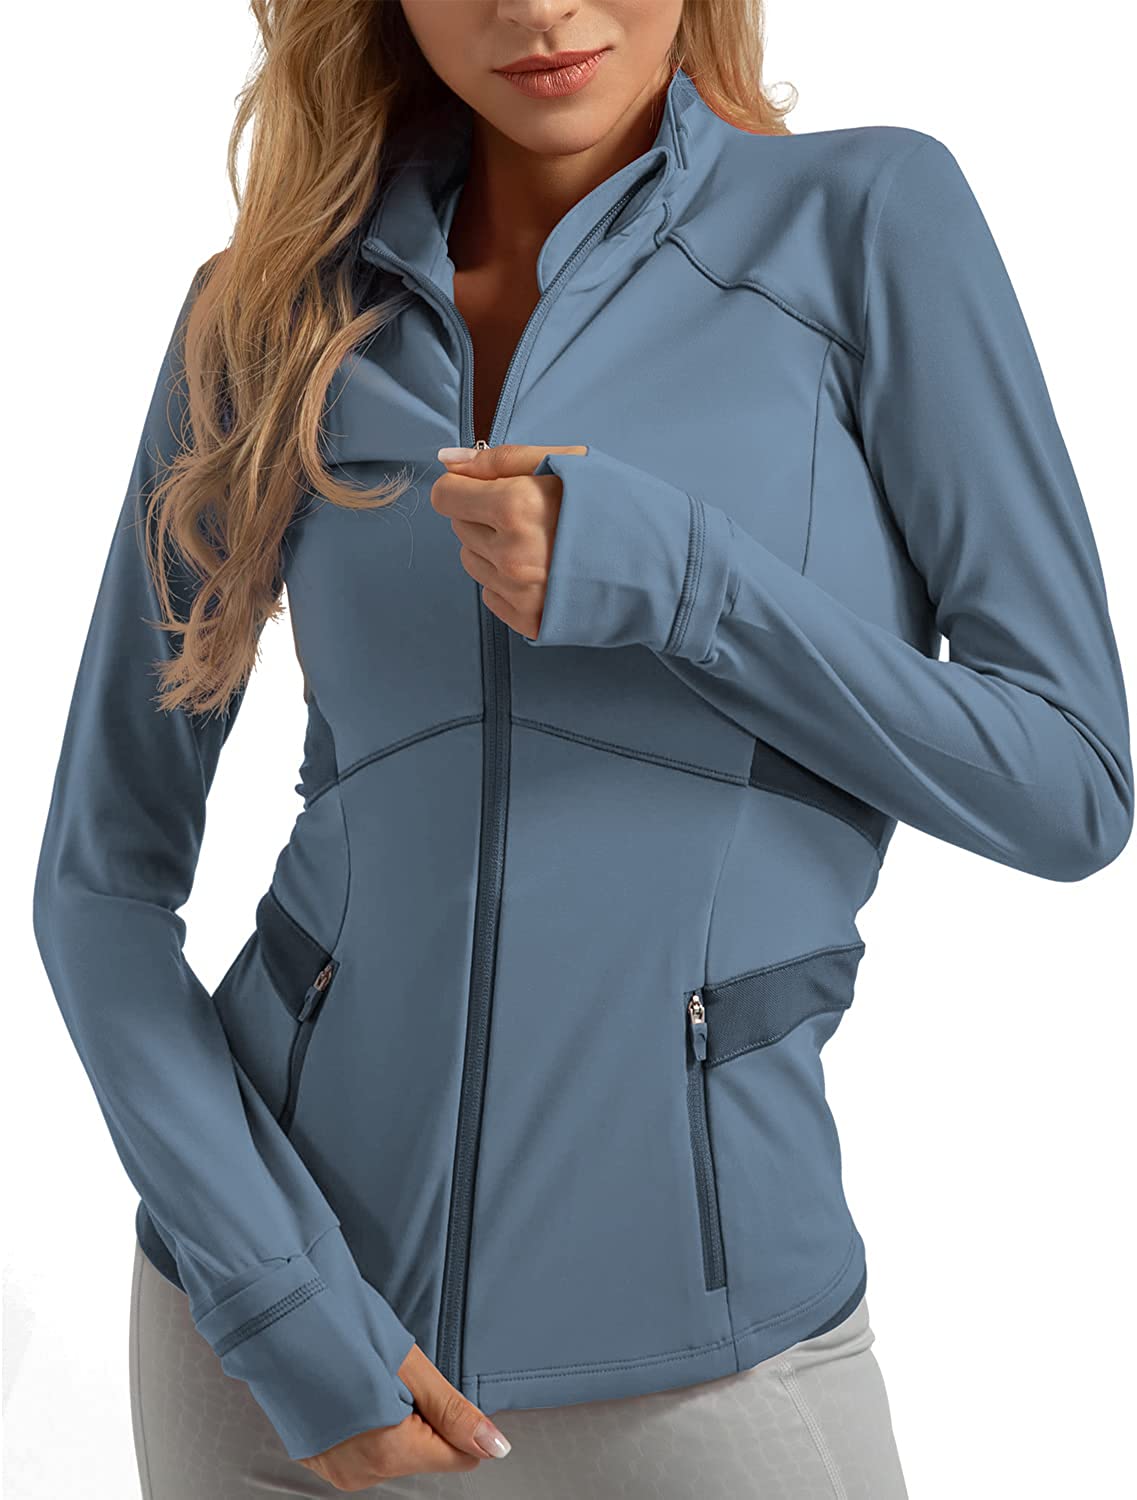 QUEENIEKE Women's Sports Jacket Slim Fit Running Jacket Cottony-Soft  Handfeel 60 | eBay